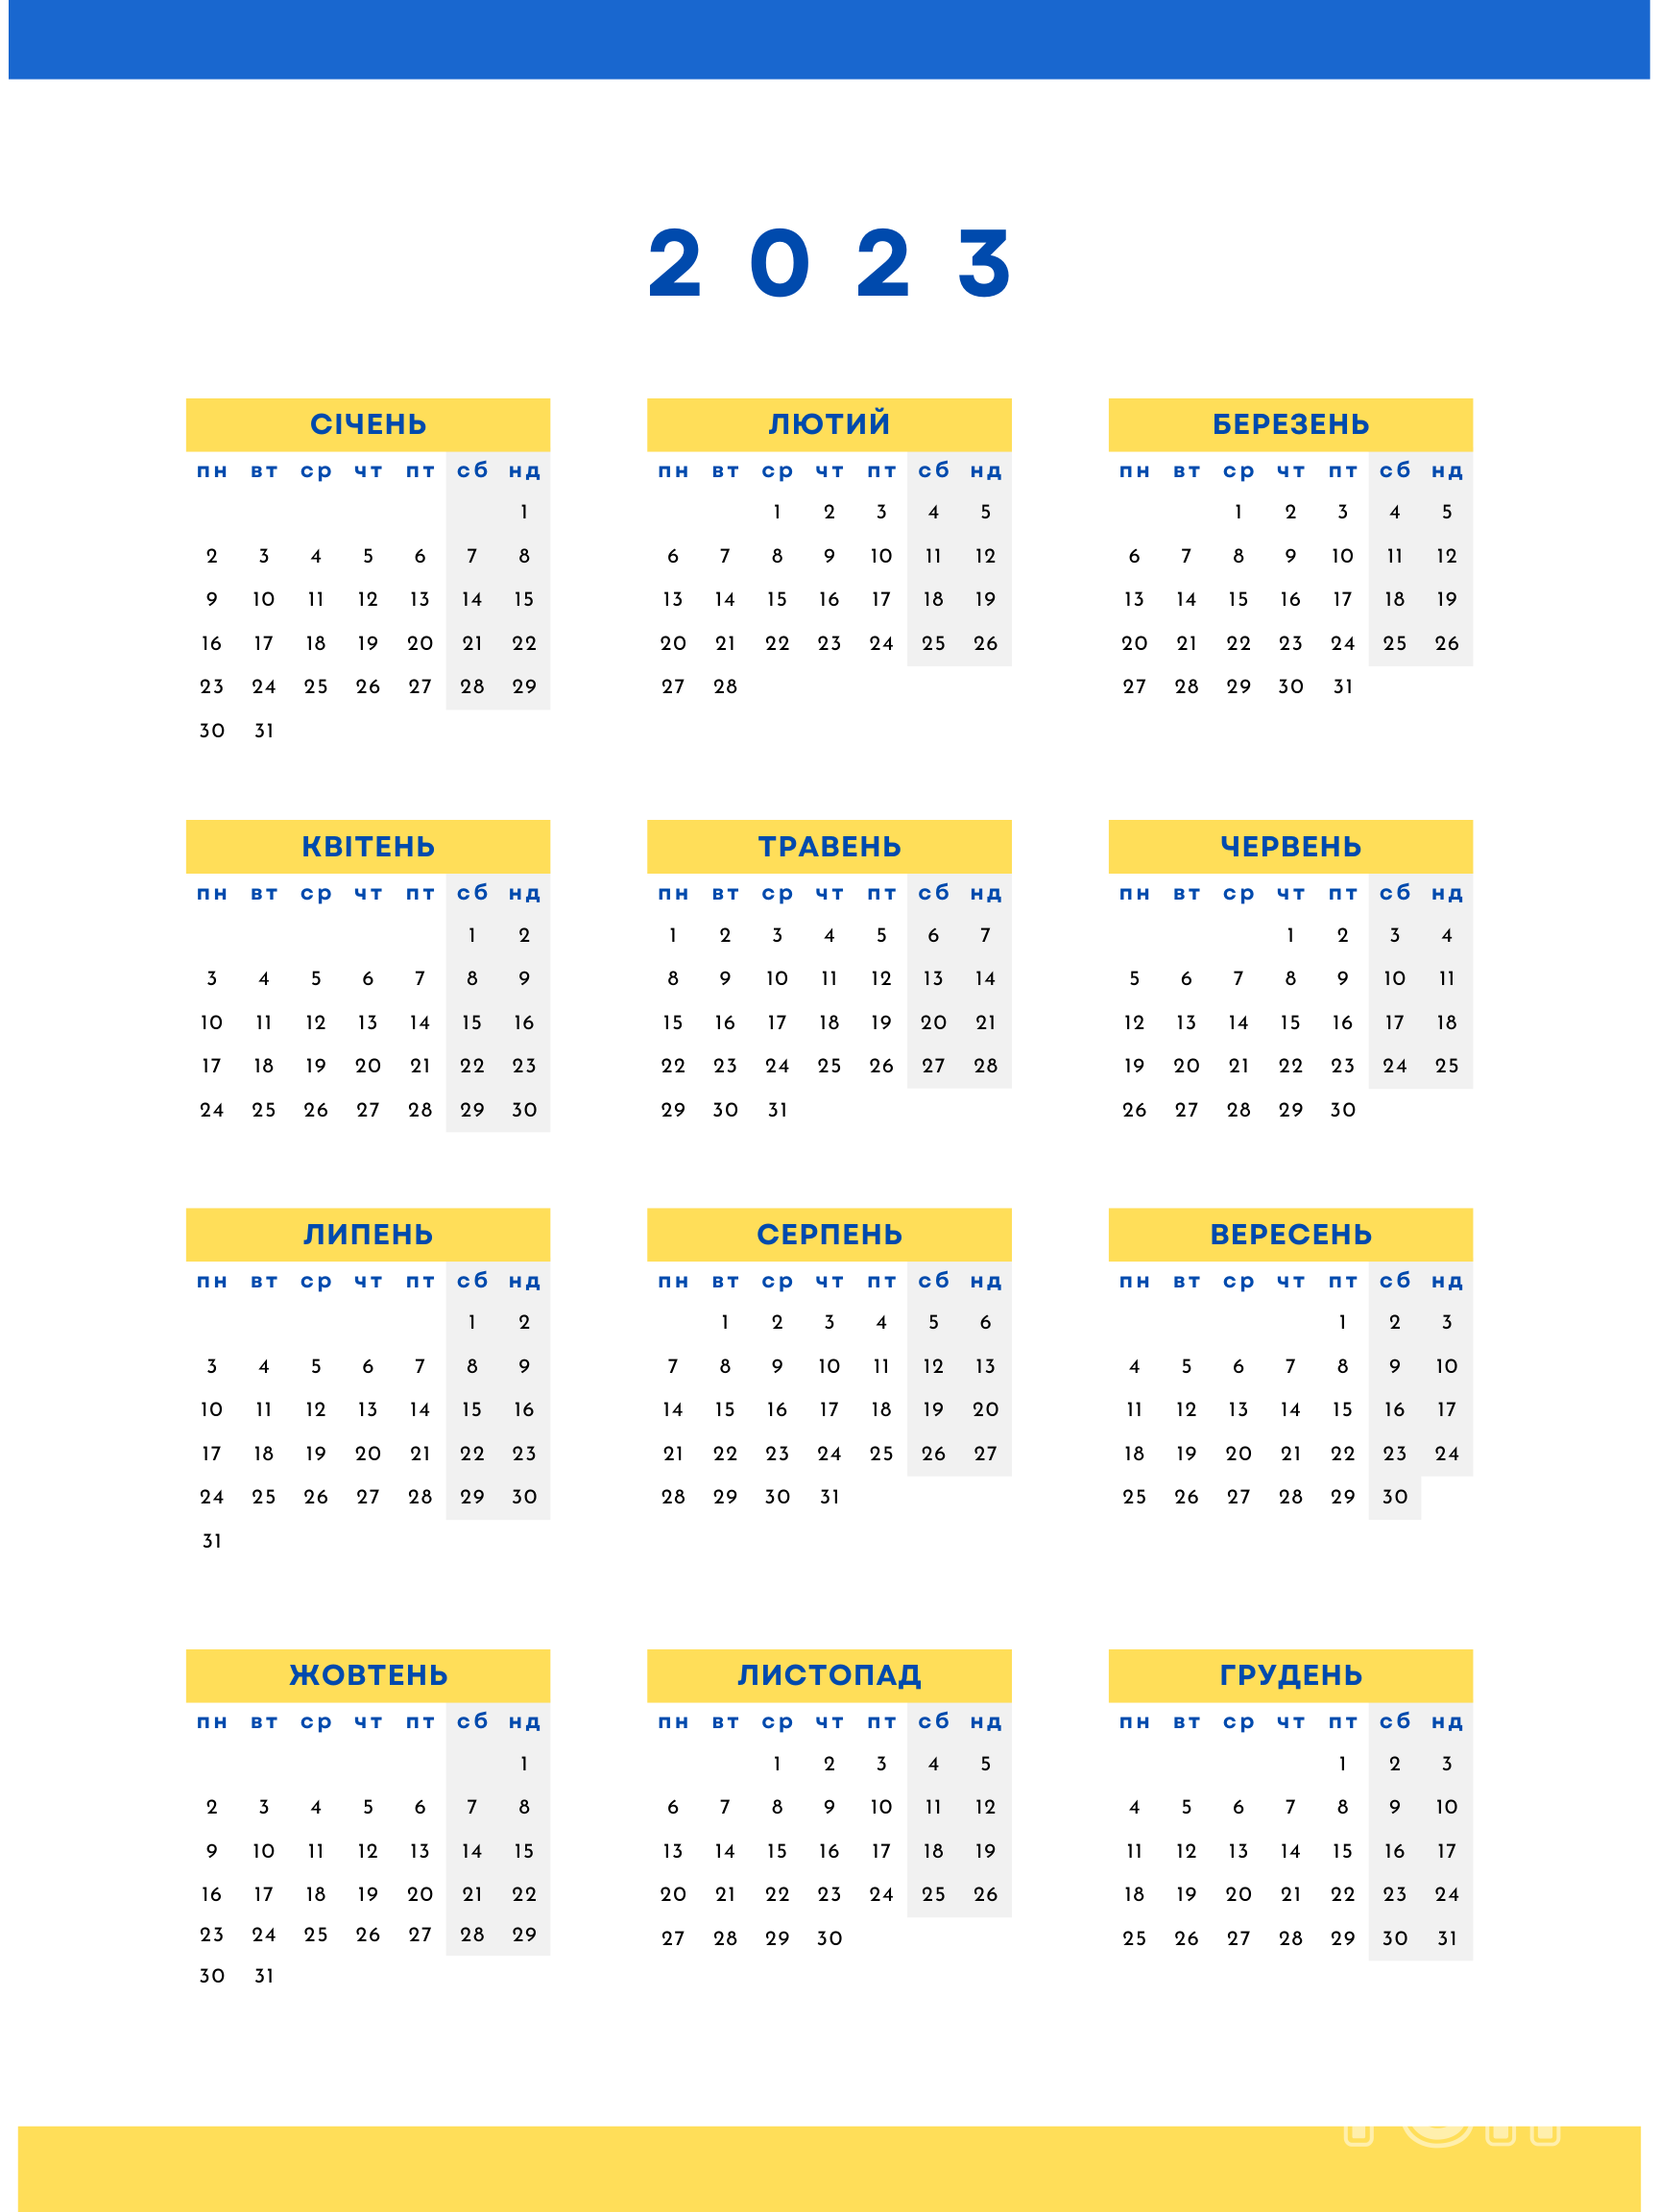 Класичний календар на 2023 рік / © ТСН.ua